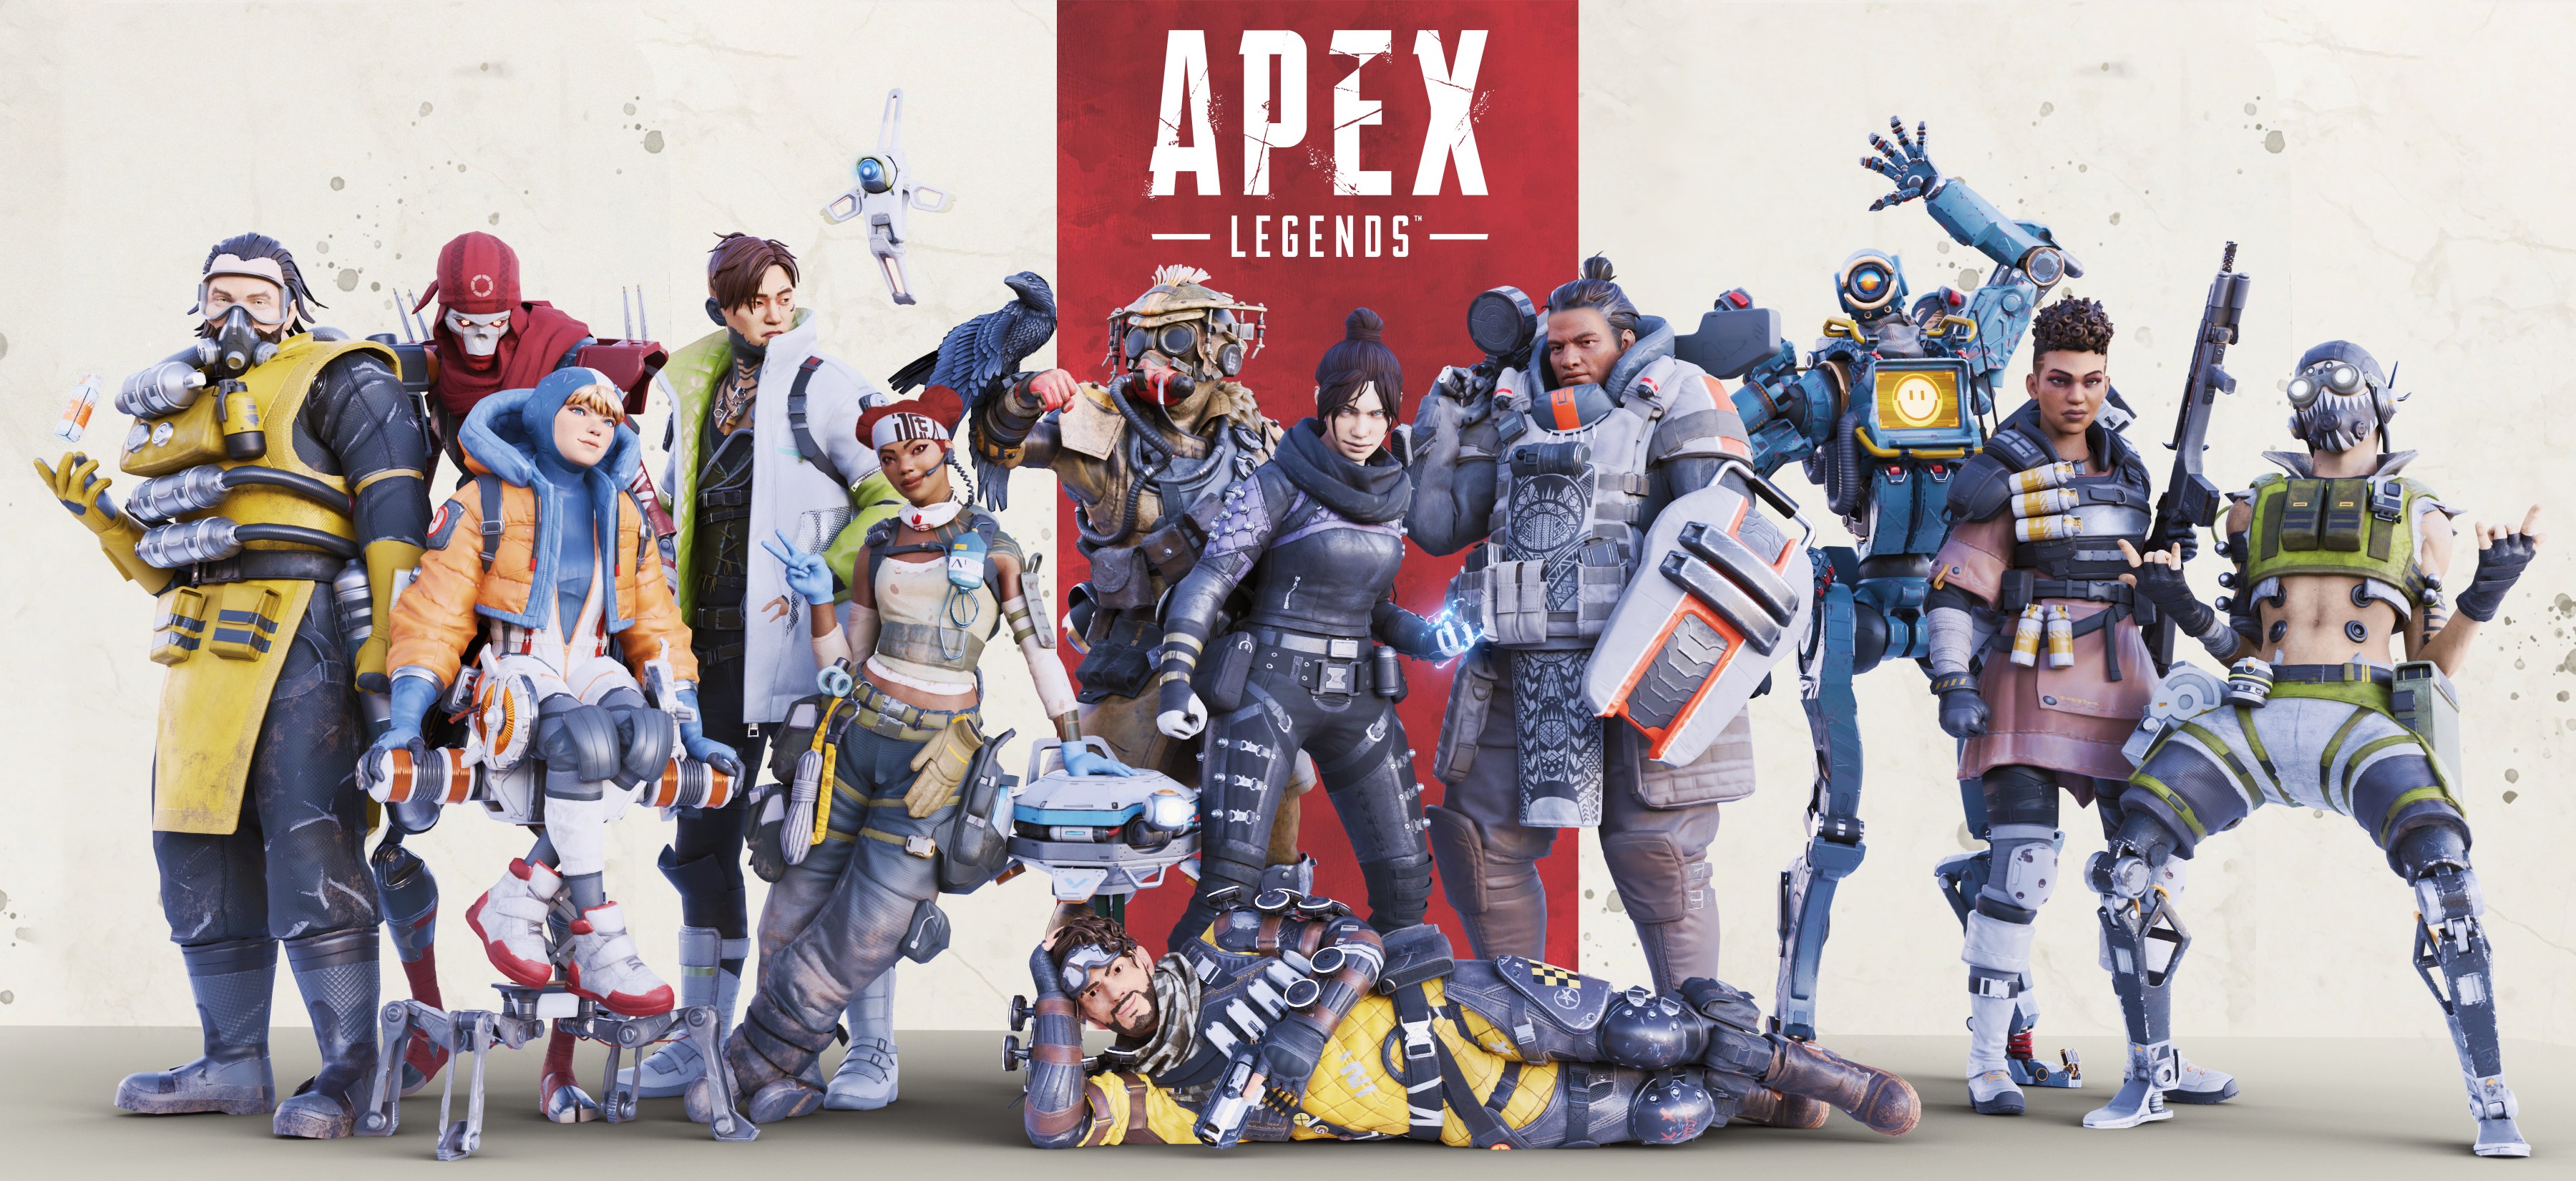 Rxmvn Remade a Apex Legends Wallpaper Using The Games 3D Assets :) ❤️&♻️ Appreciated!